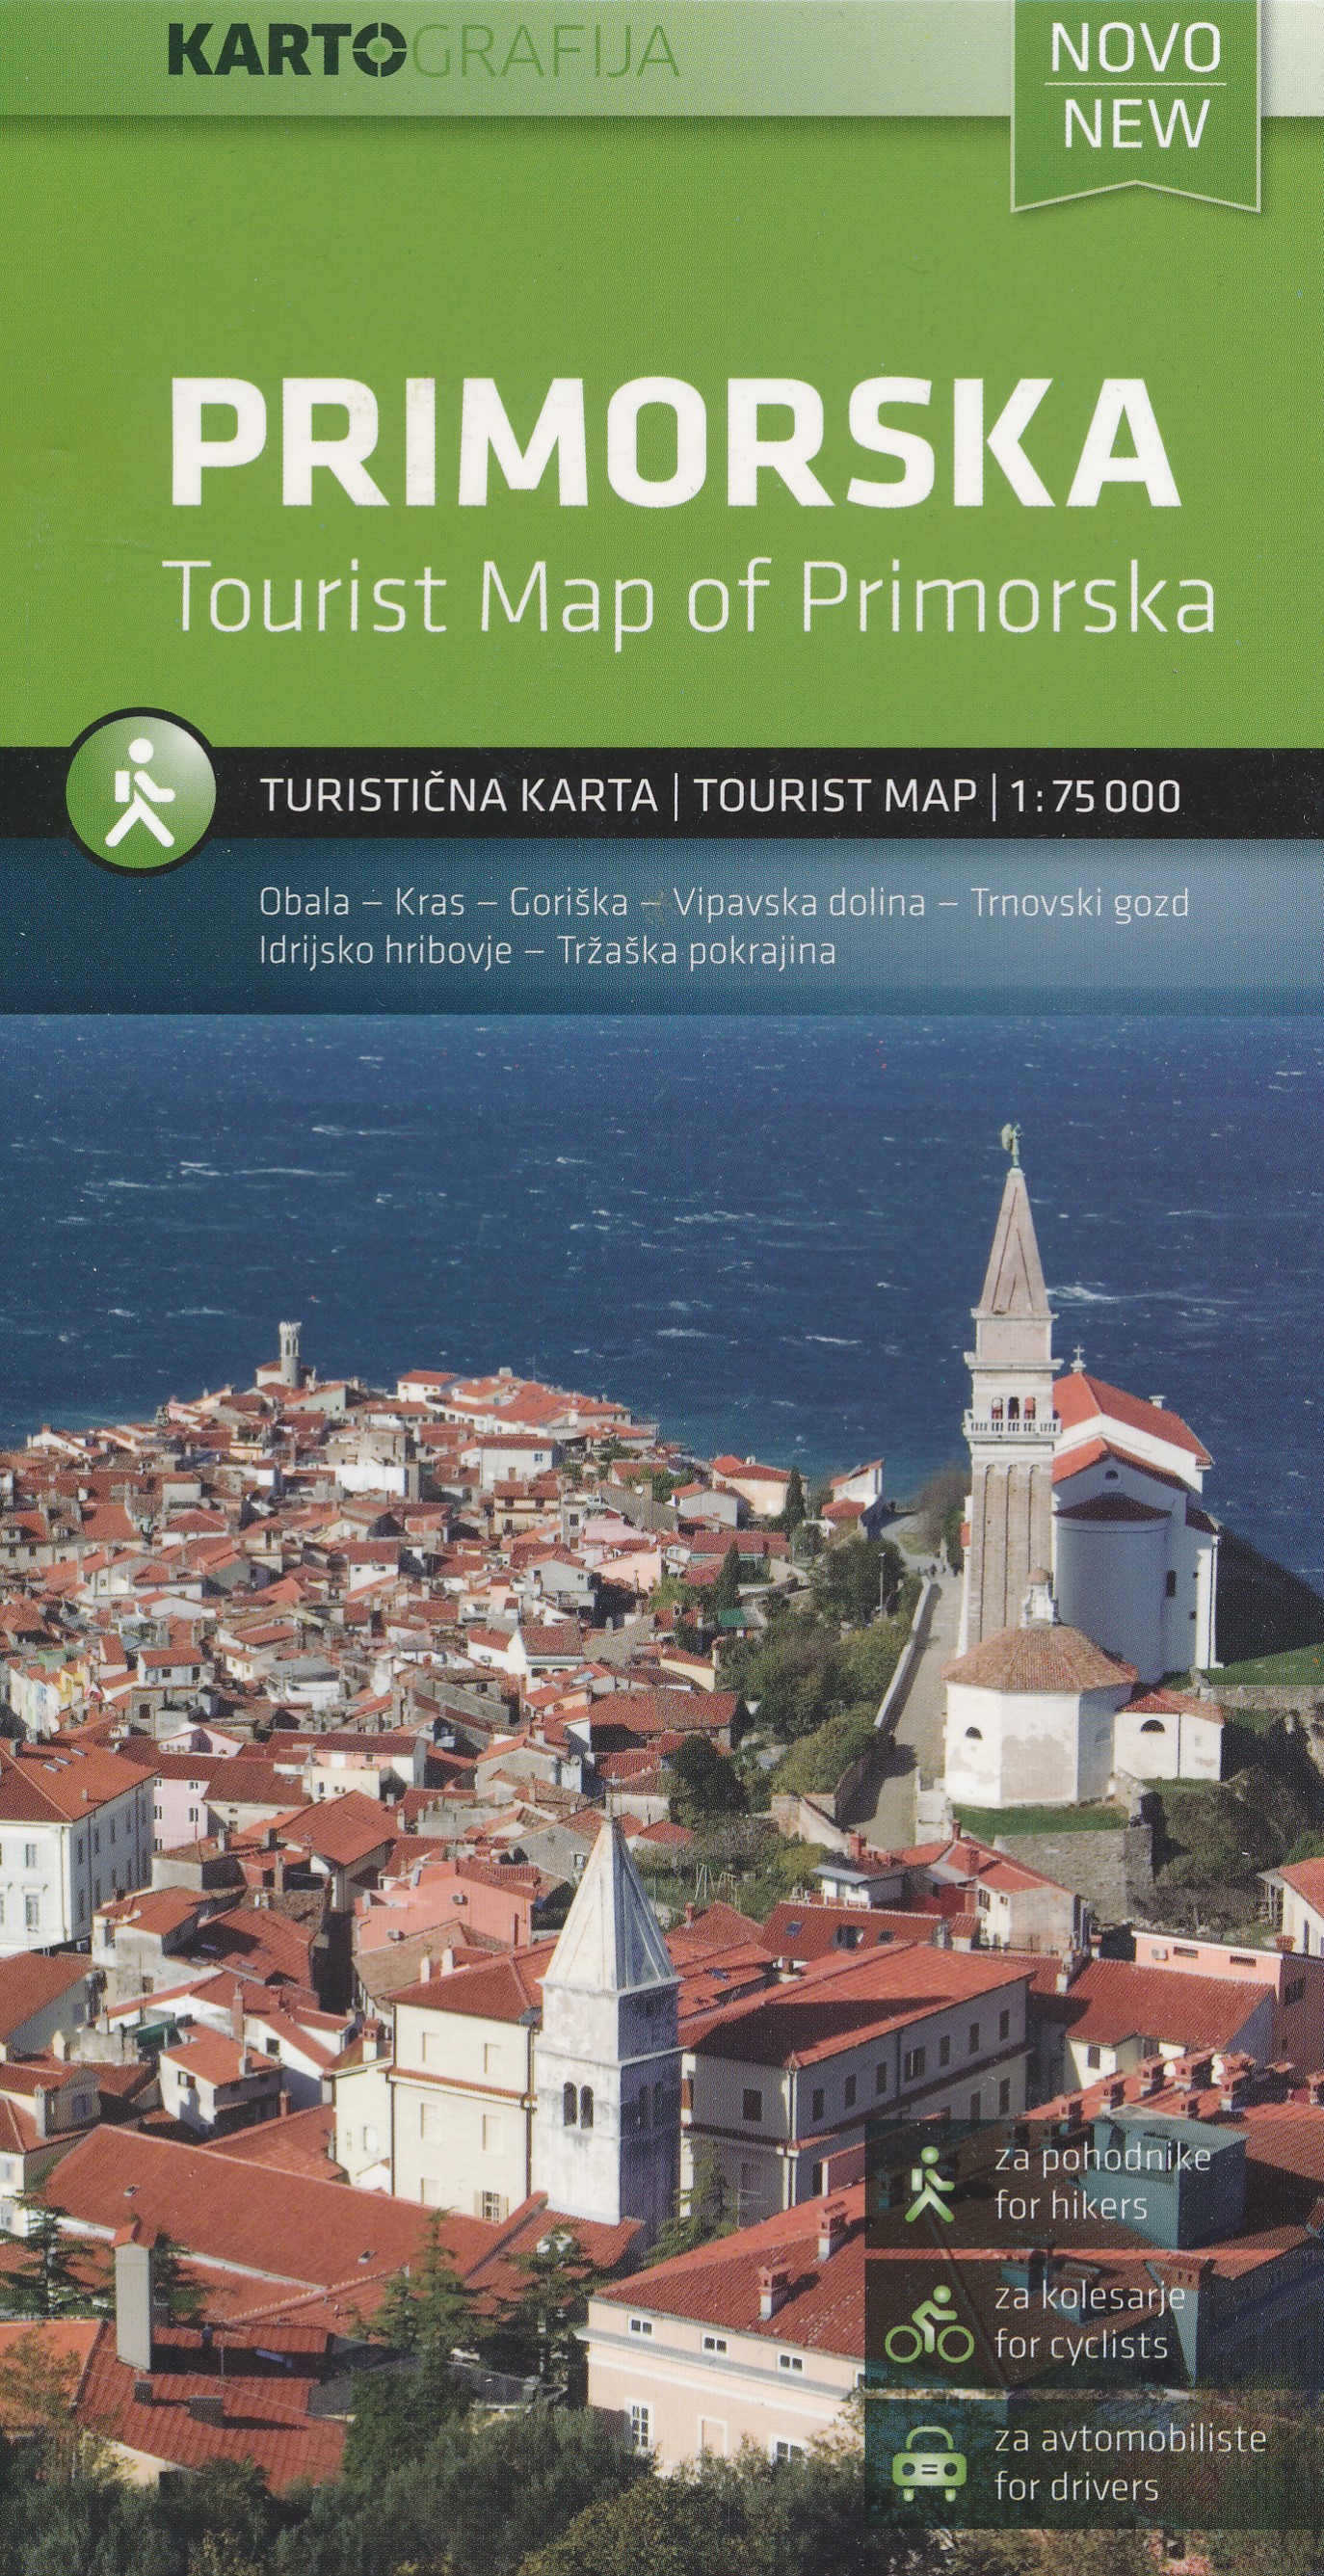 Online bestellen: Fietskaart - Wegenkaart - landkaart Primorska | Kartografija